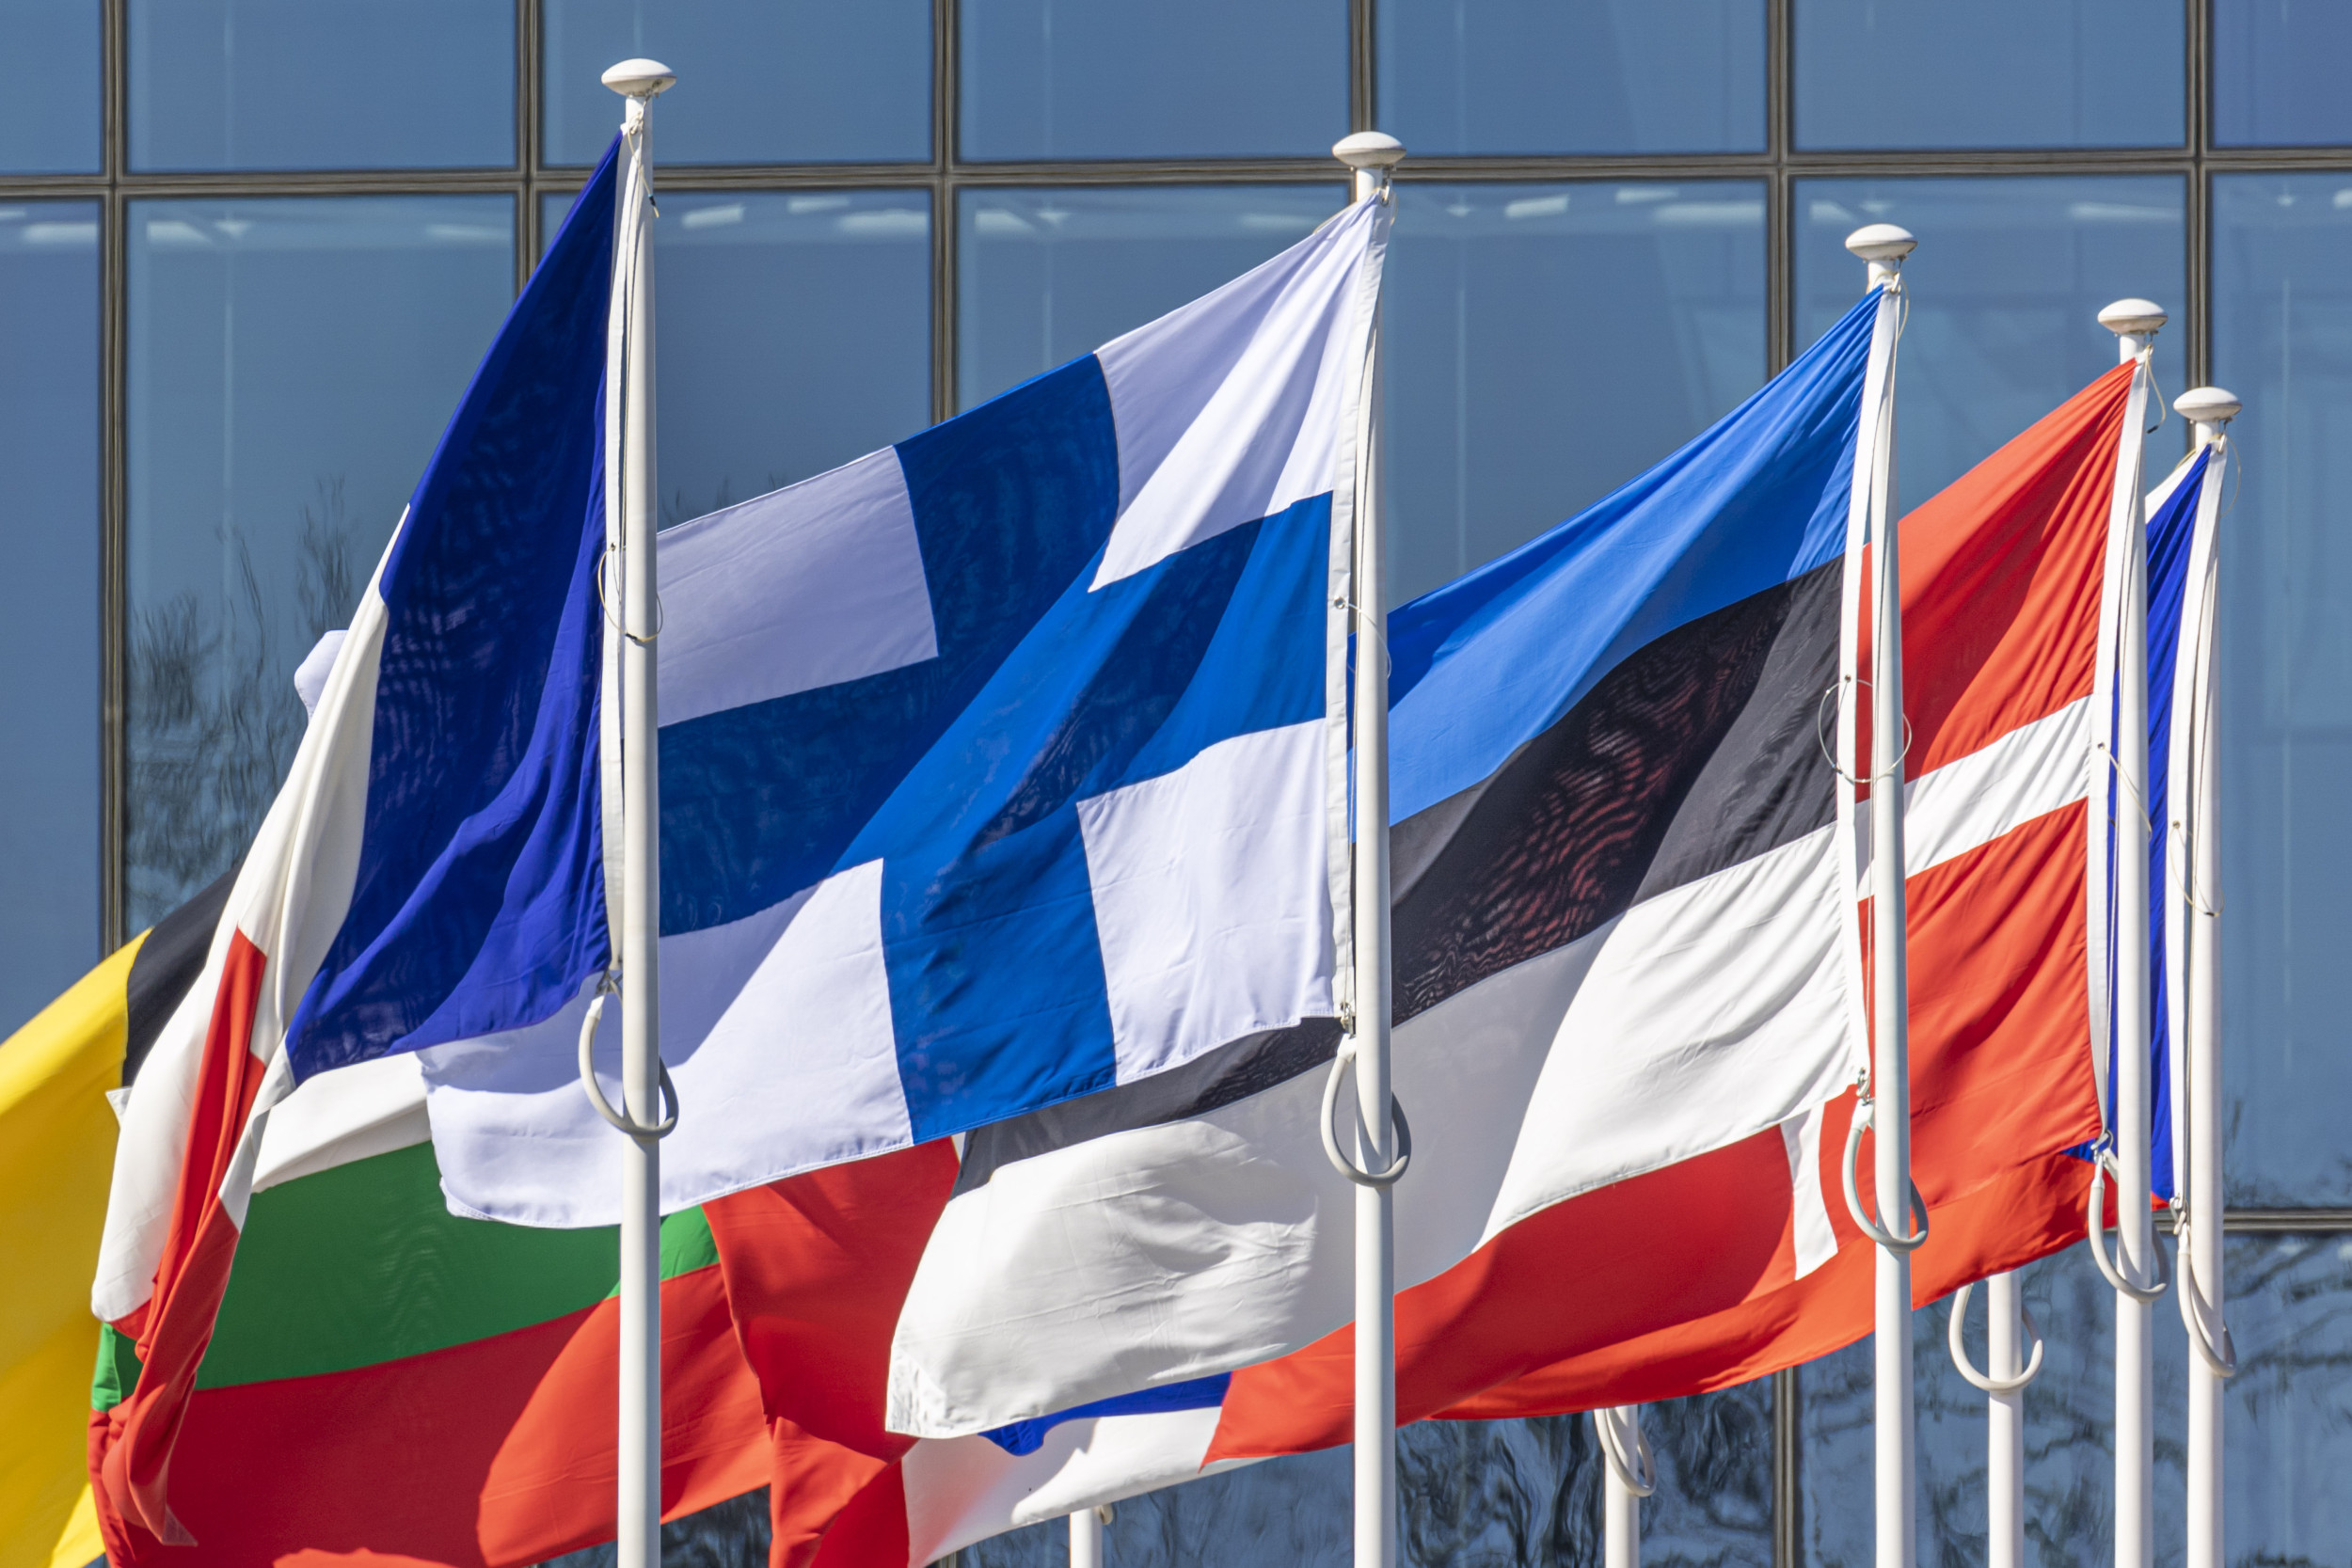 Finland flag at NATO